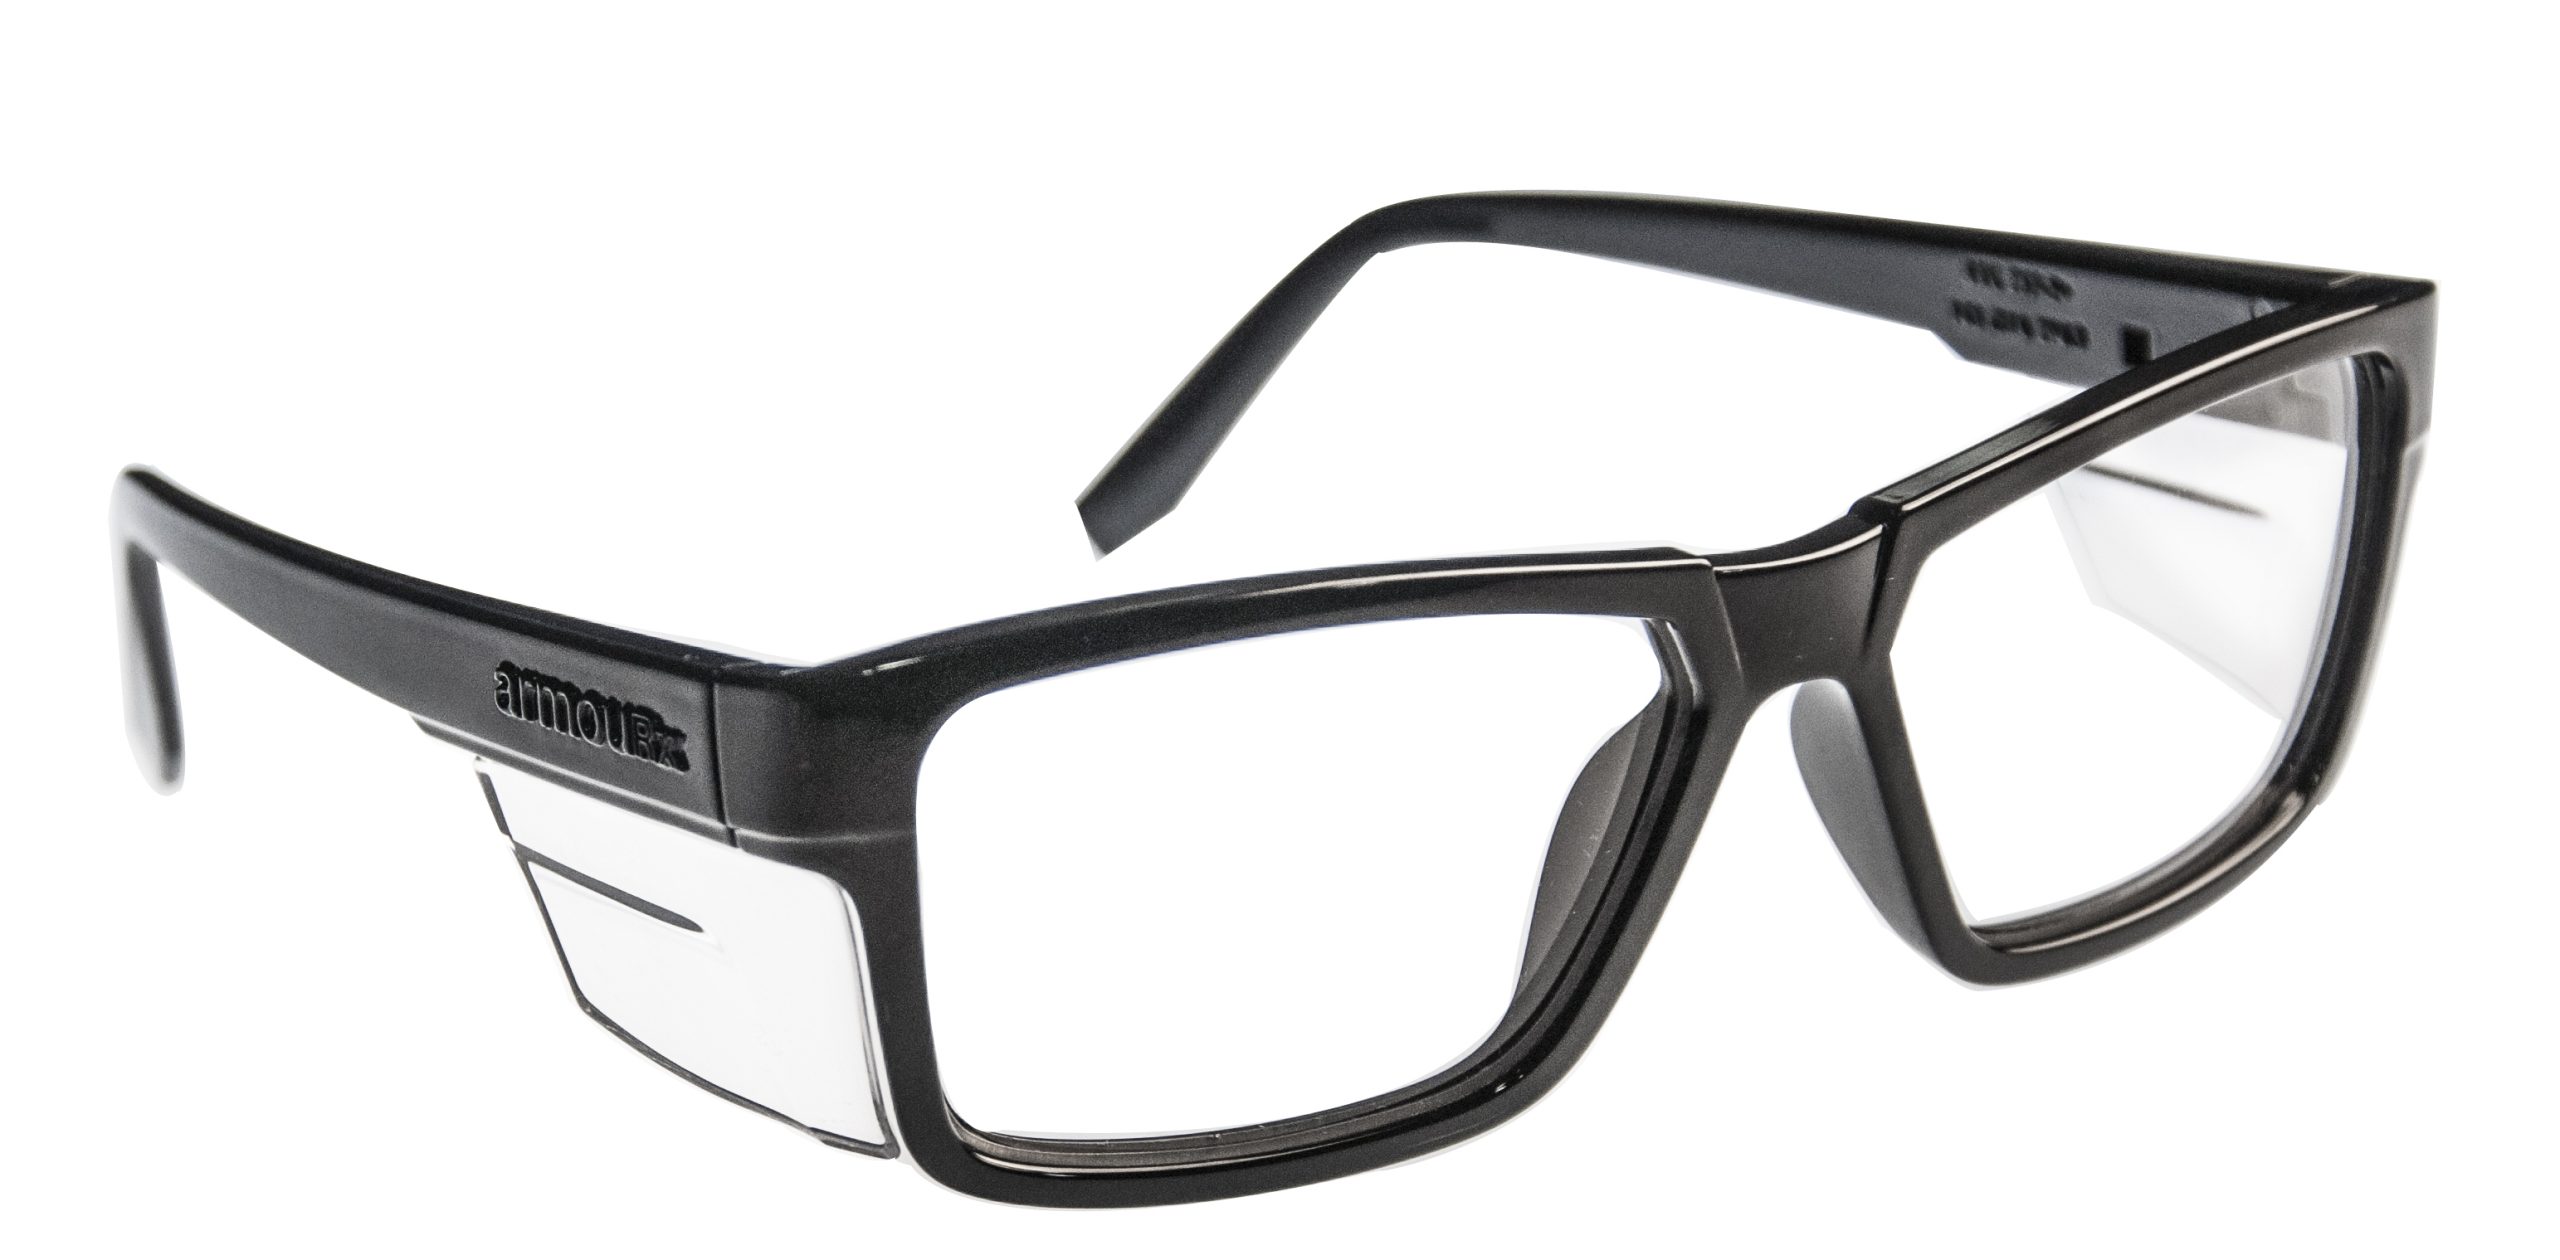 Safety glasses frames BASIC: MODEL 5005 in Black